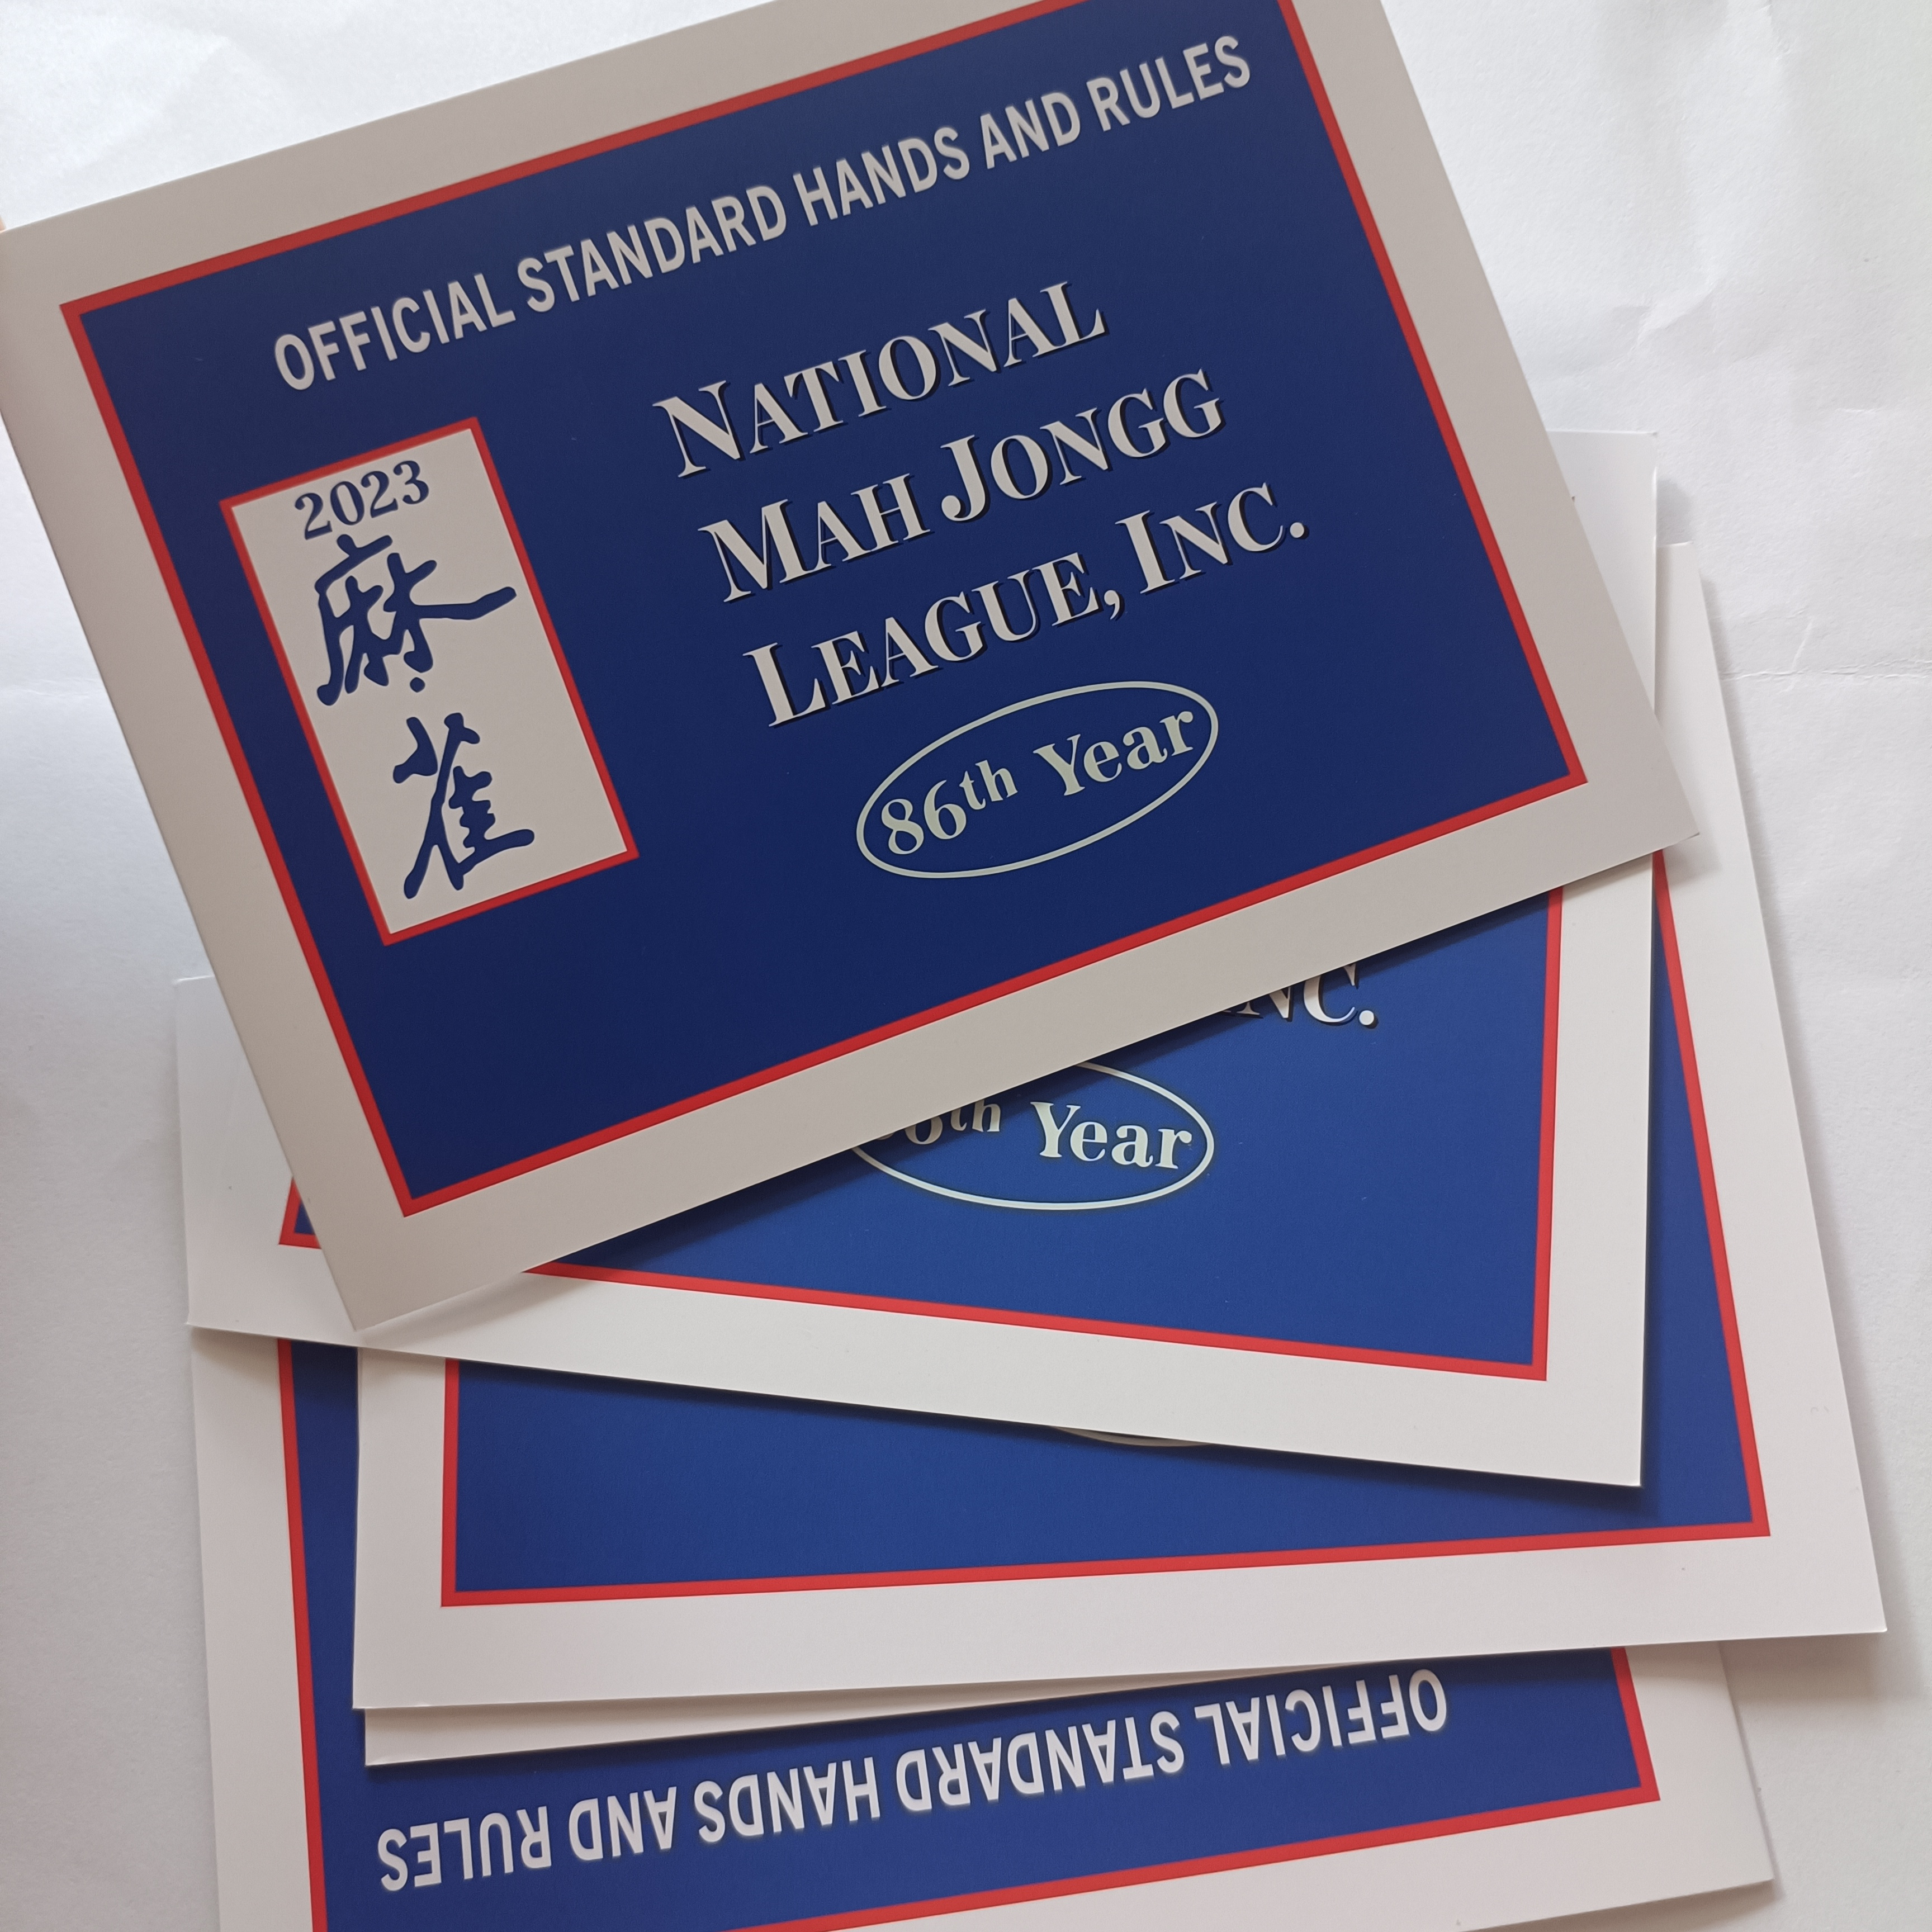 Large Print Mahjong Cards with National Mah Jong Rules - Perfect for  Mahjongg Leagues!